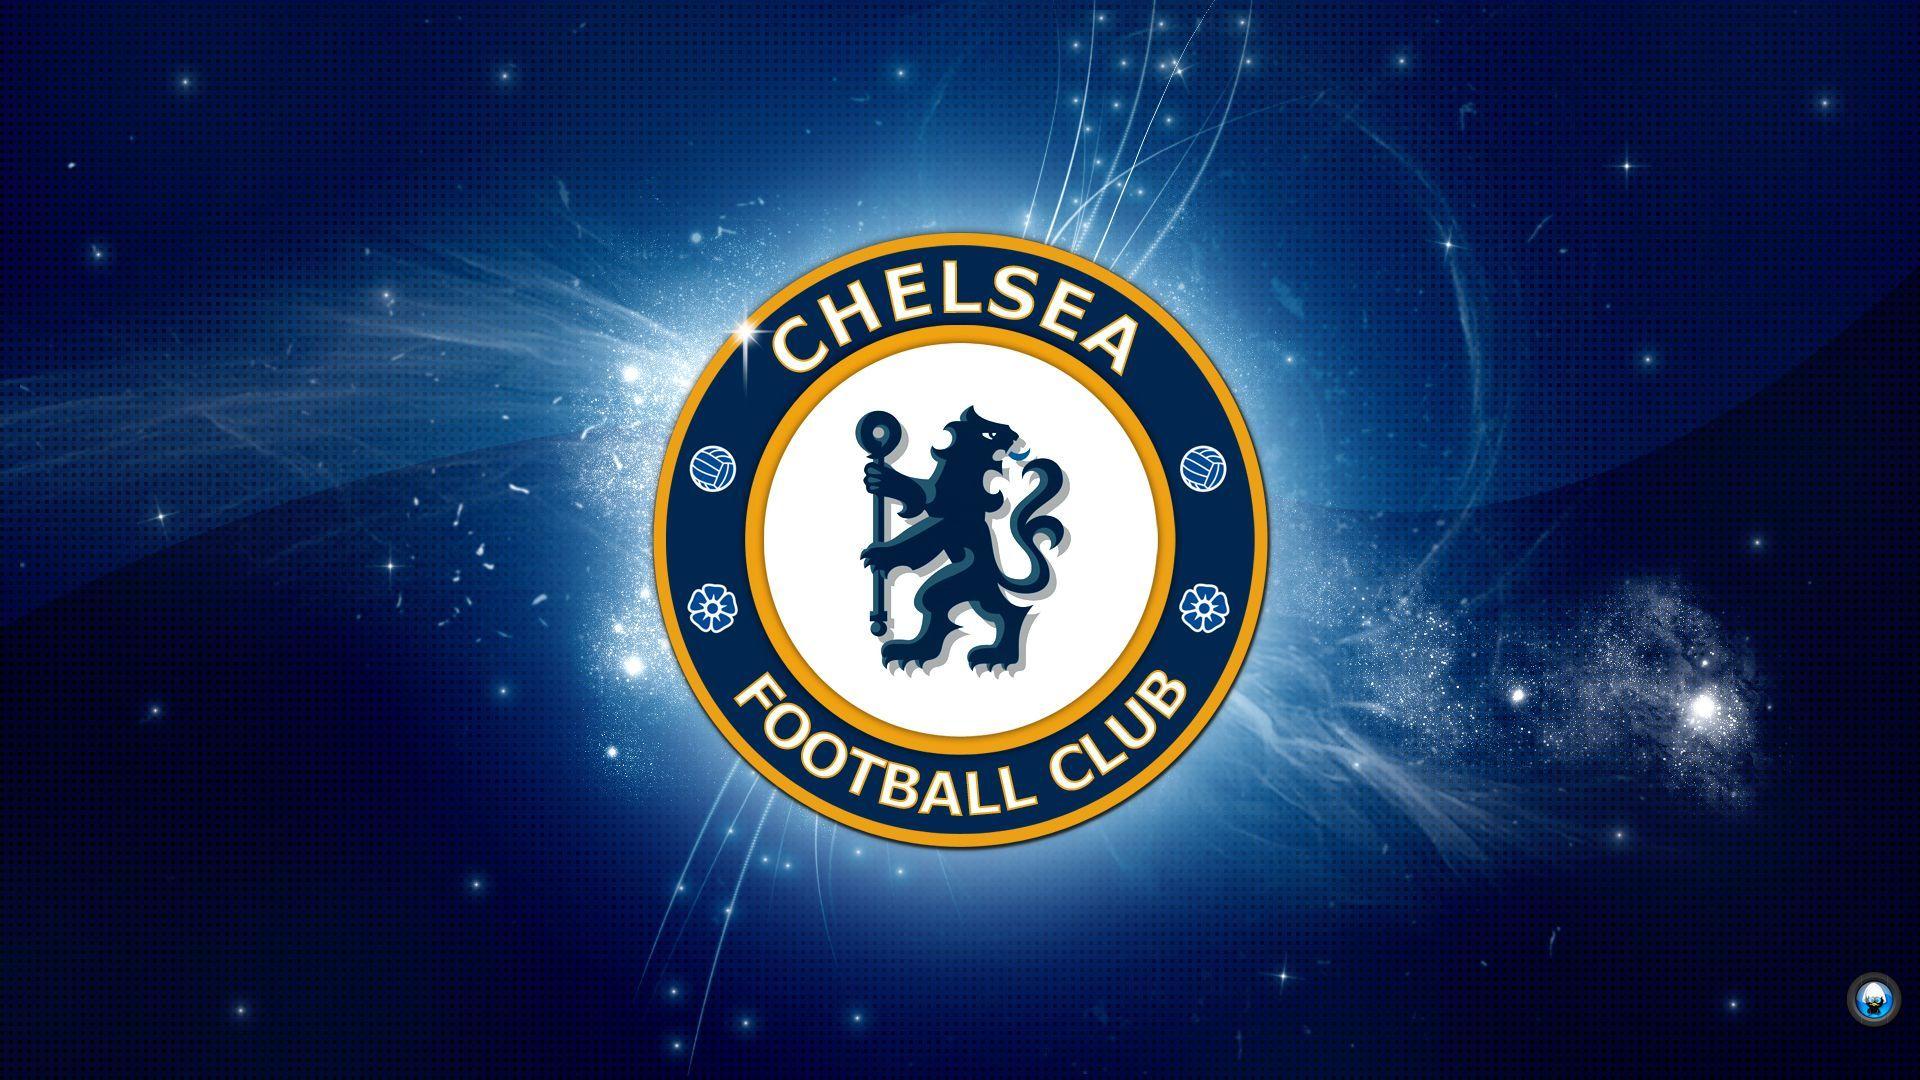 Chelsea Football Club Wallpapers - Top Free Chelsea Football Club ...